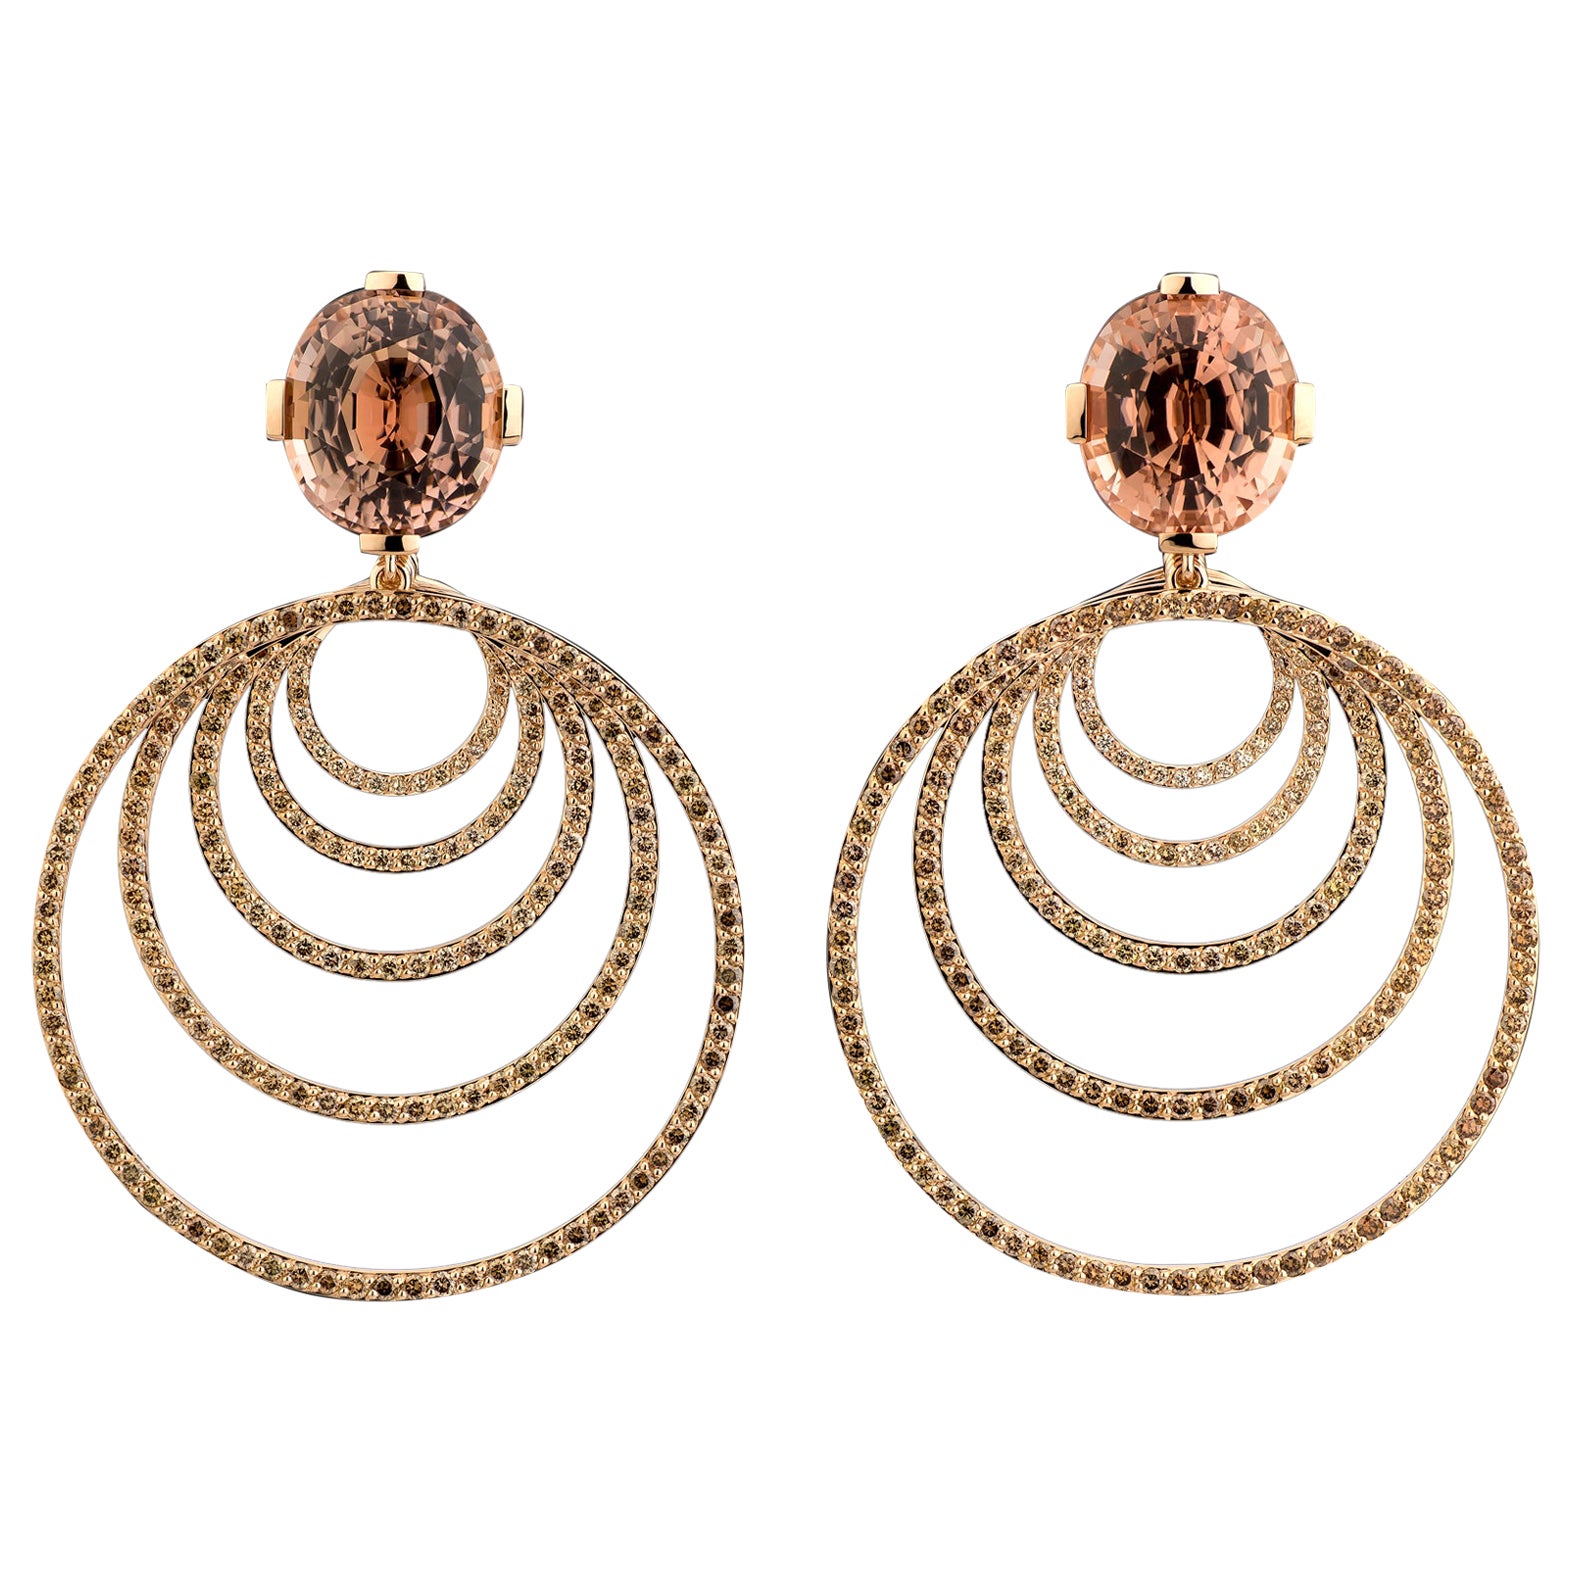 Festive tourmaline earrings 22.32 carat, 18k rose gold, 406 diamonds